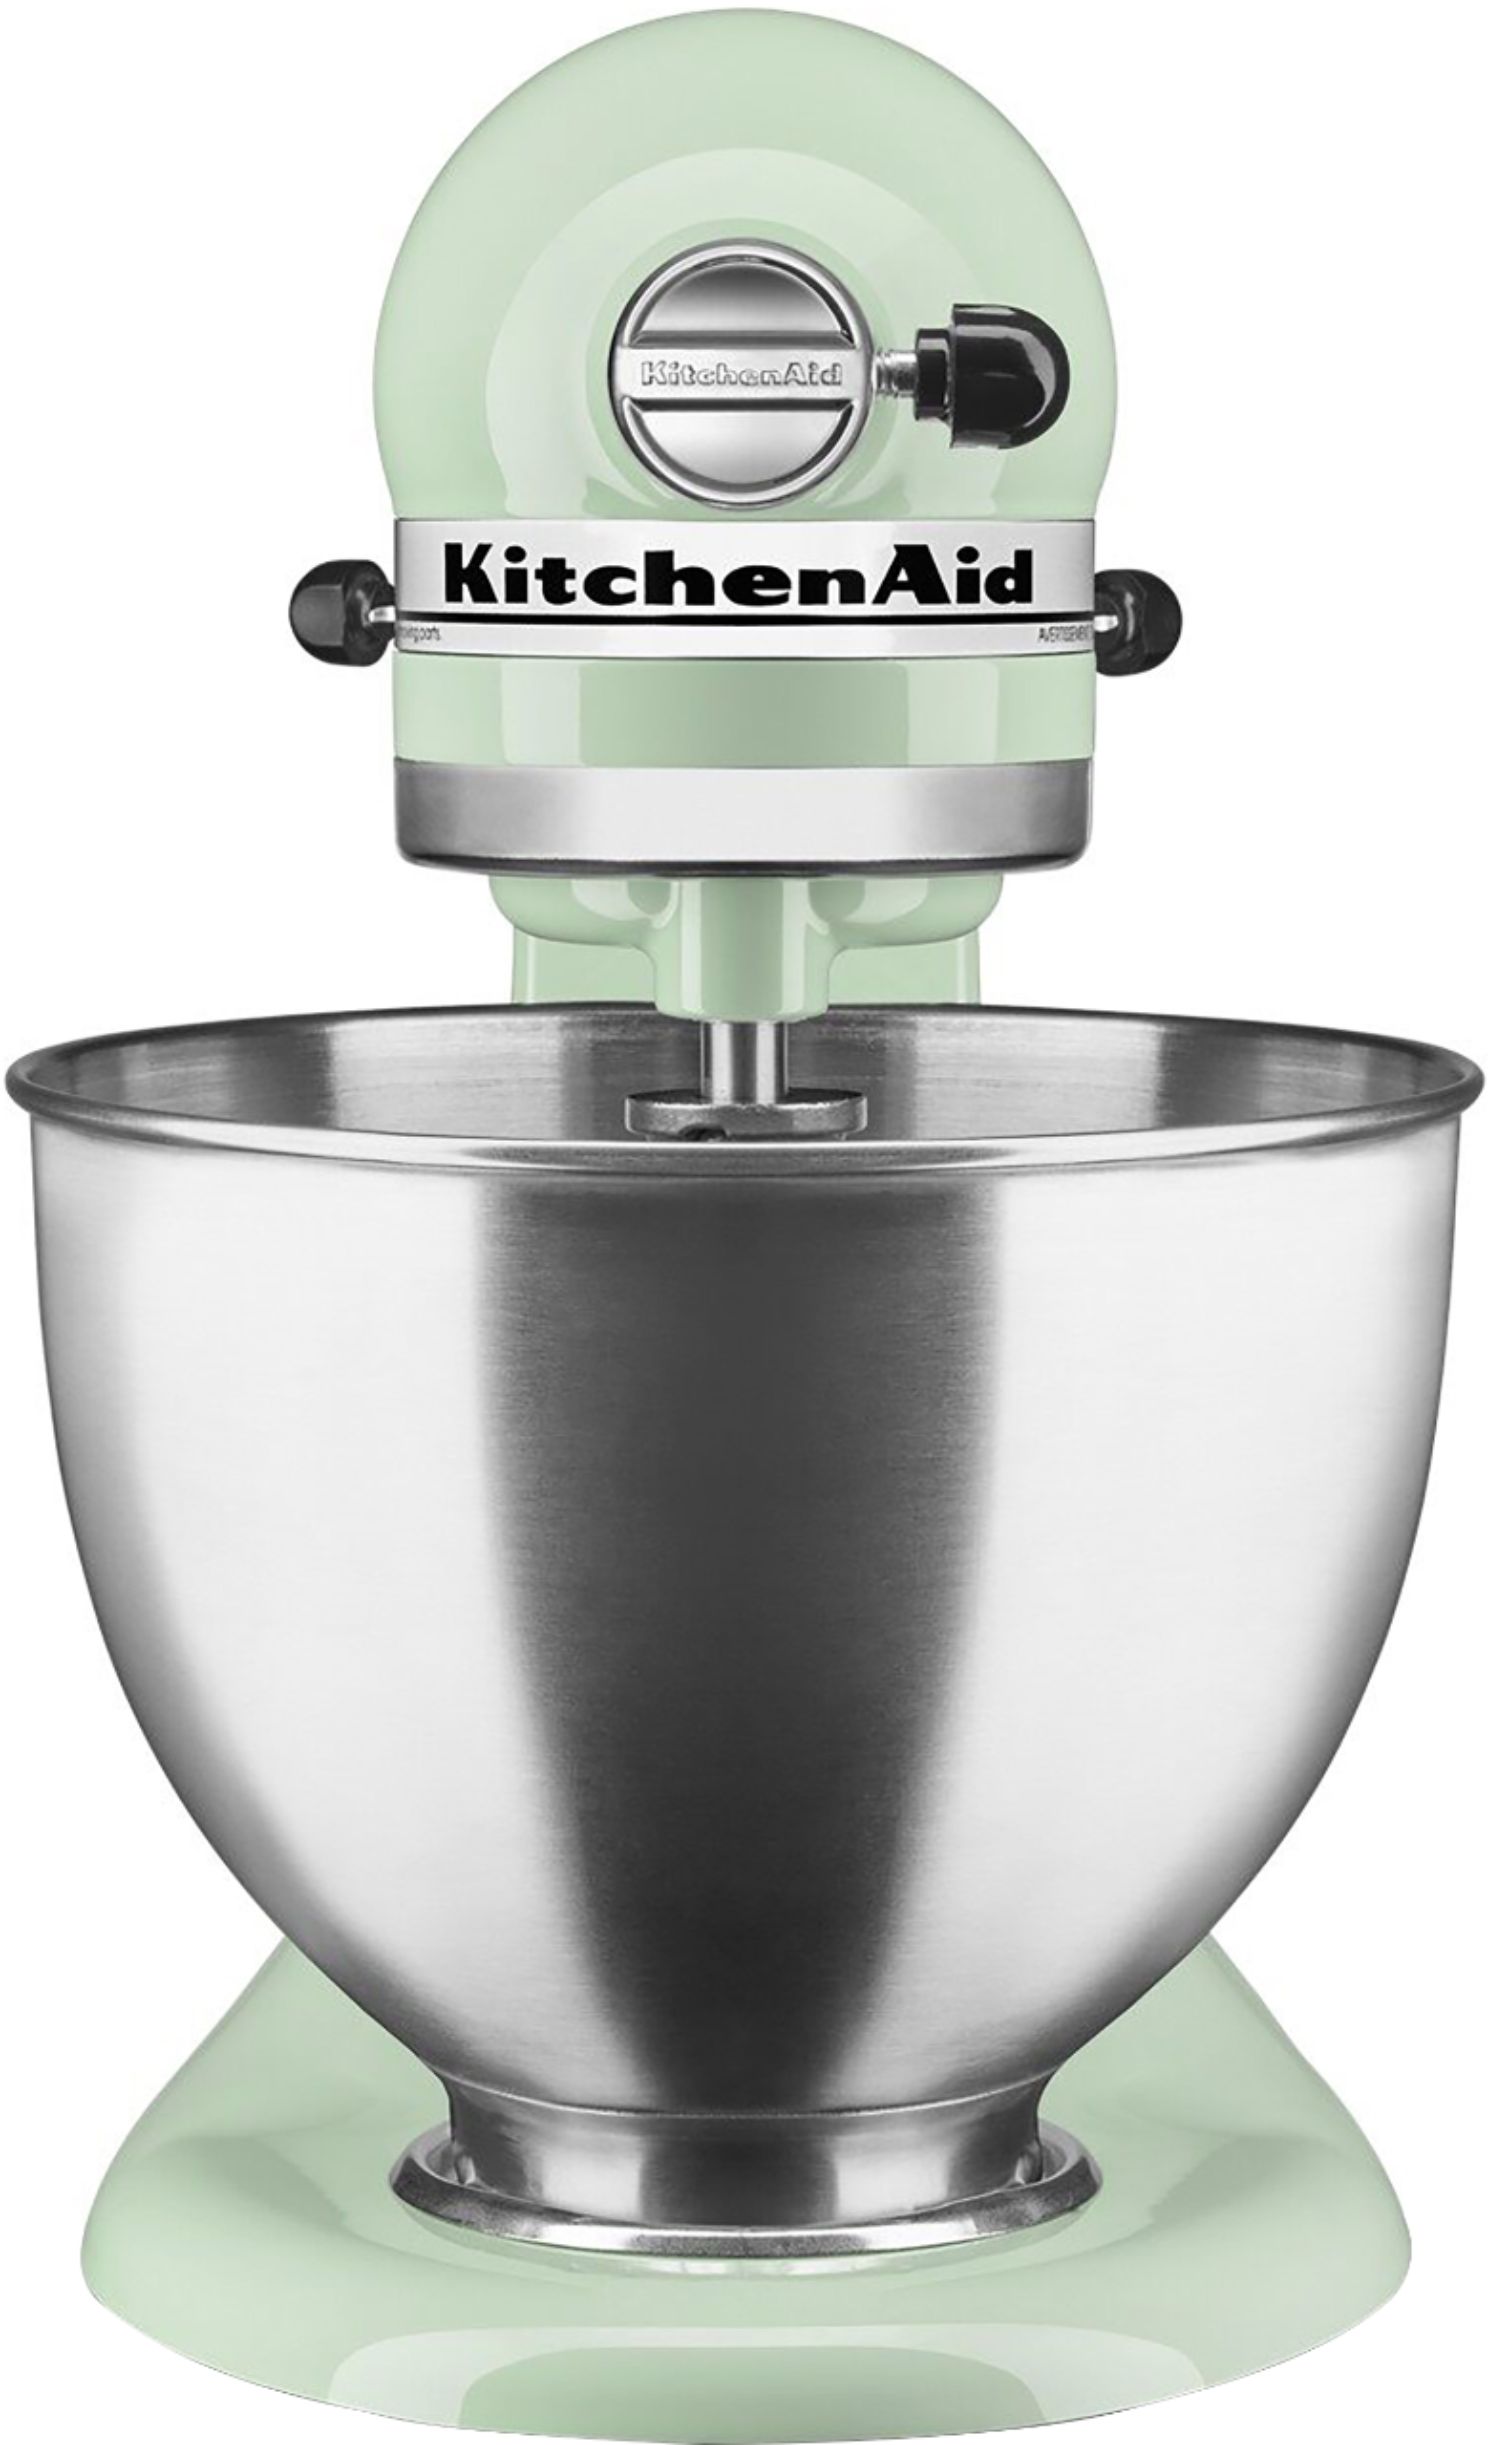 Mixer KitchenAid 300 Watt - 4.8 Liter - Dark Green - 5KSM185PSBPP